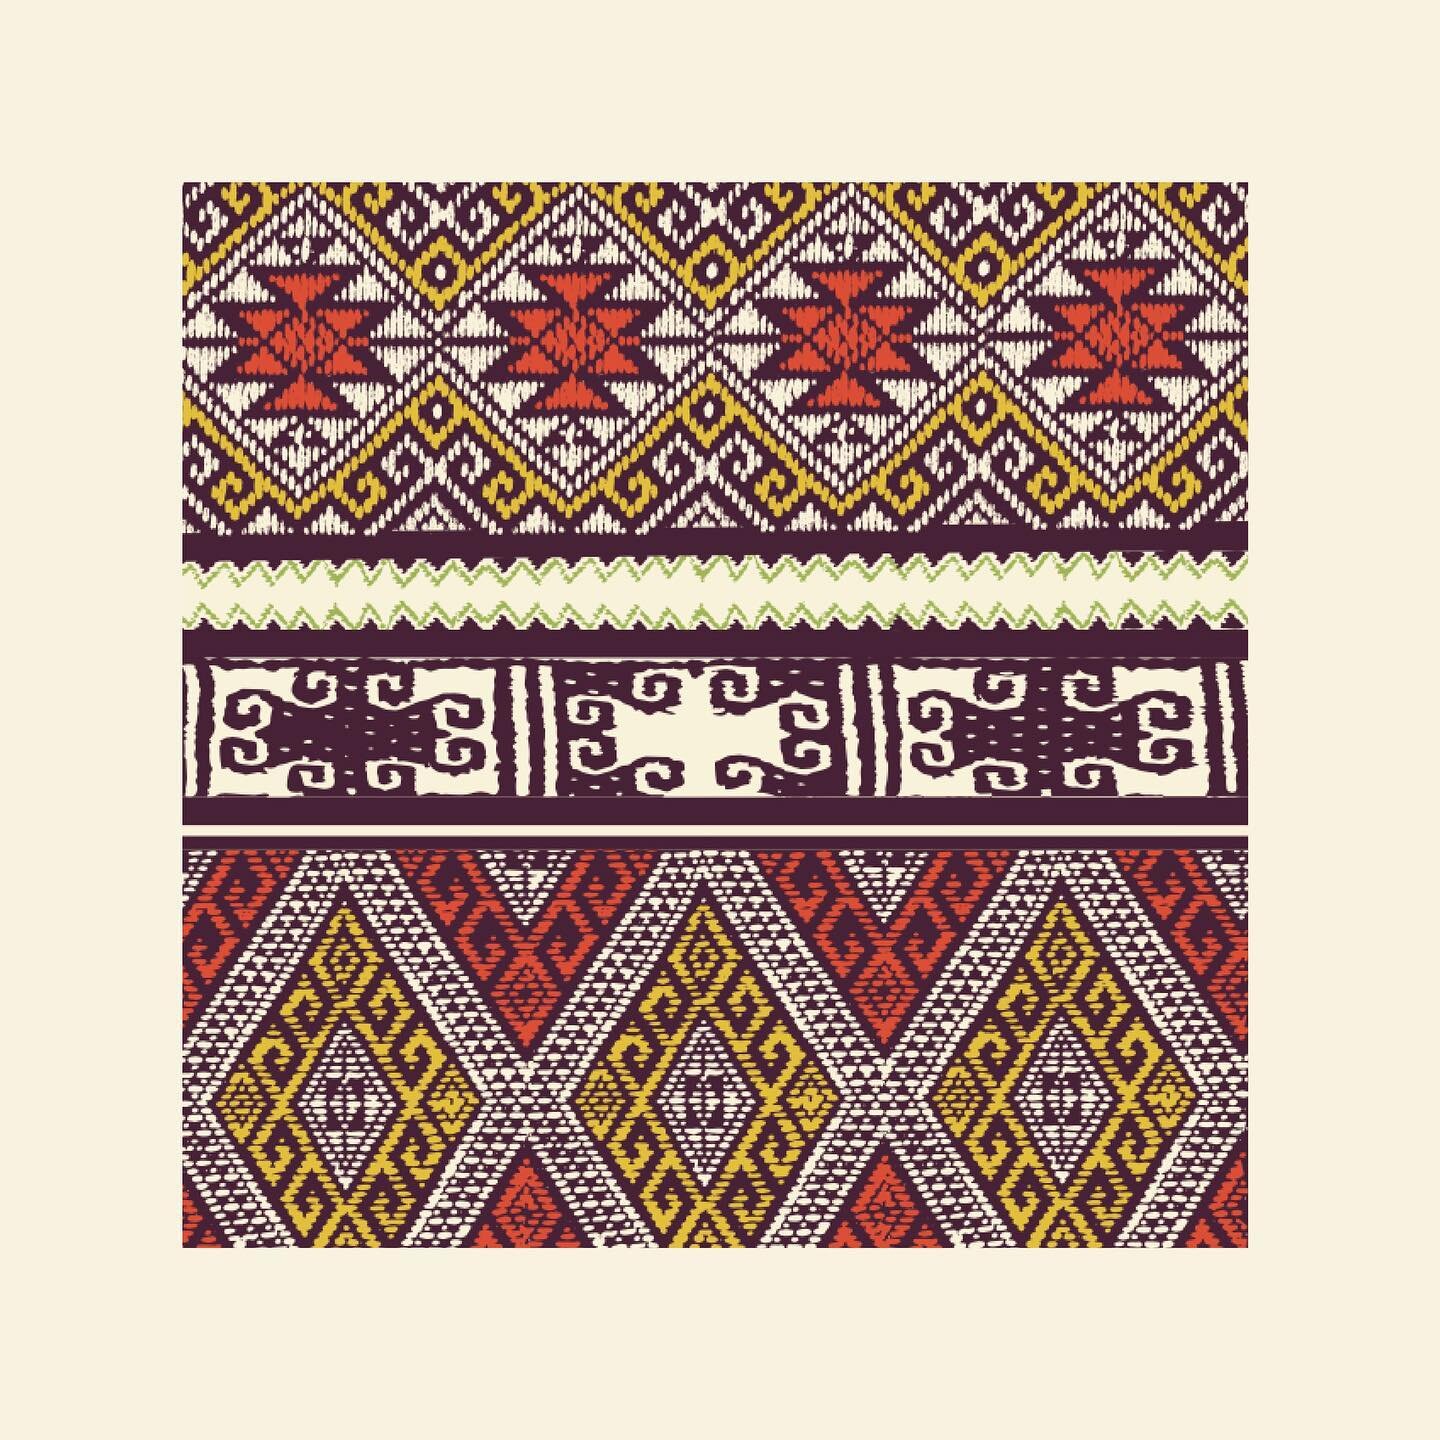 Patterns inspired by ancient Andean textiles woven into modern design 
&bull;
&bull;
&bull;
#patterndesign #peruviandesign #branding #brandpackaging #restaurantdesign #takeout